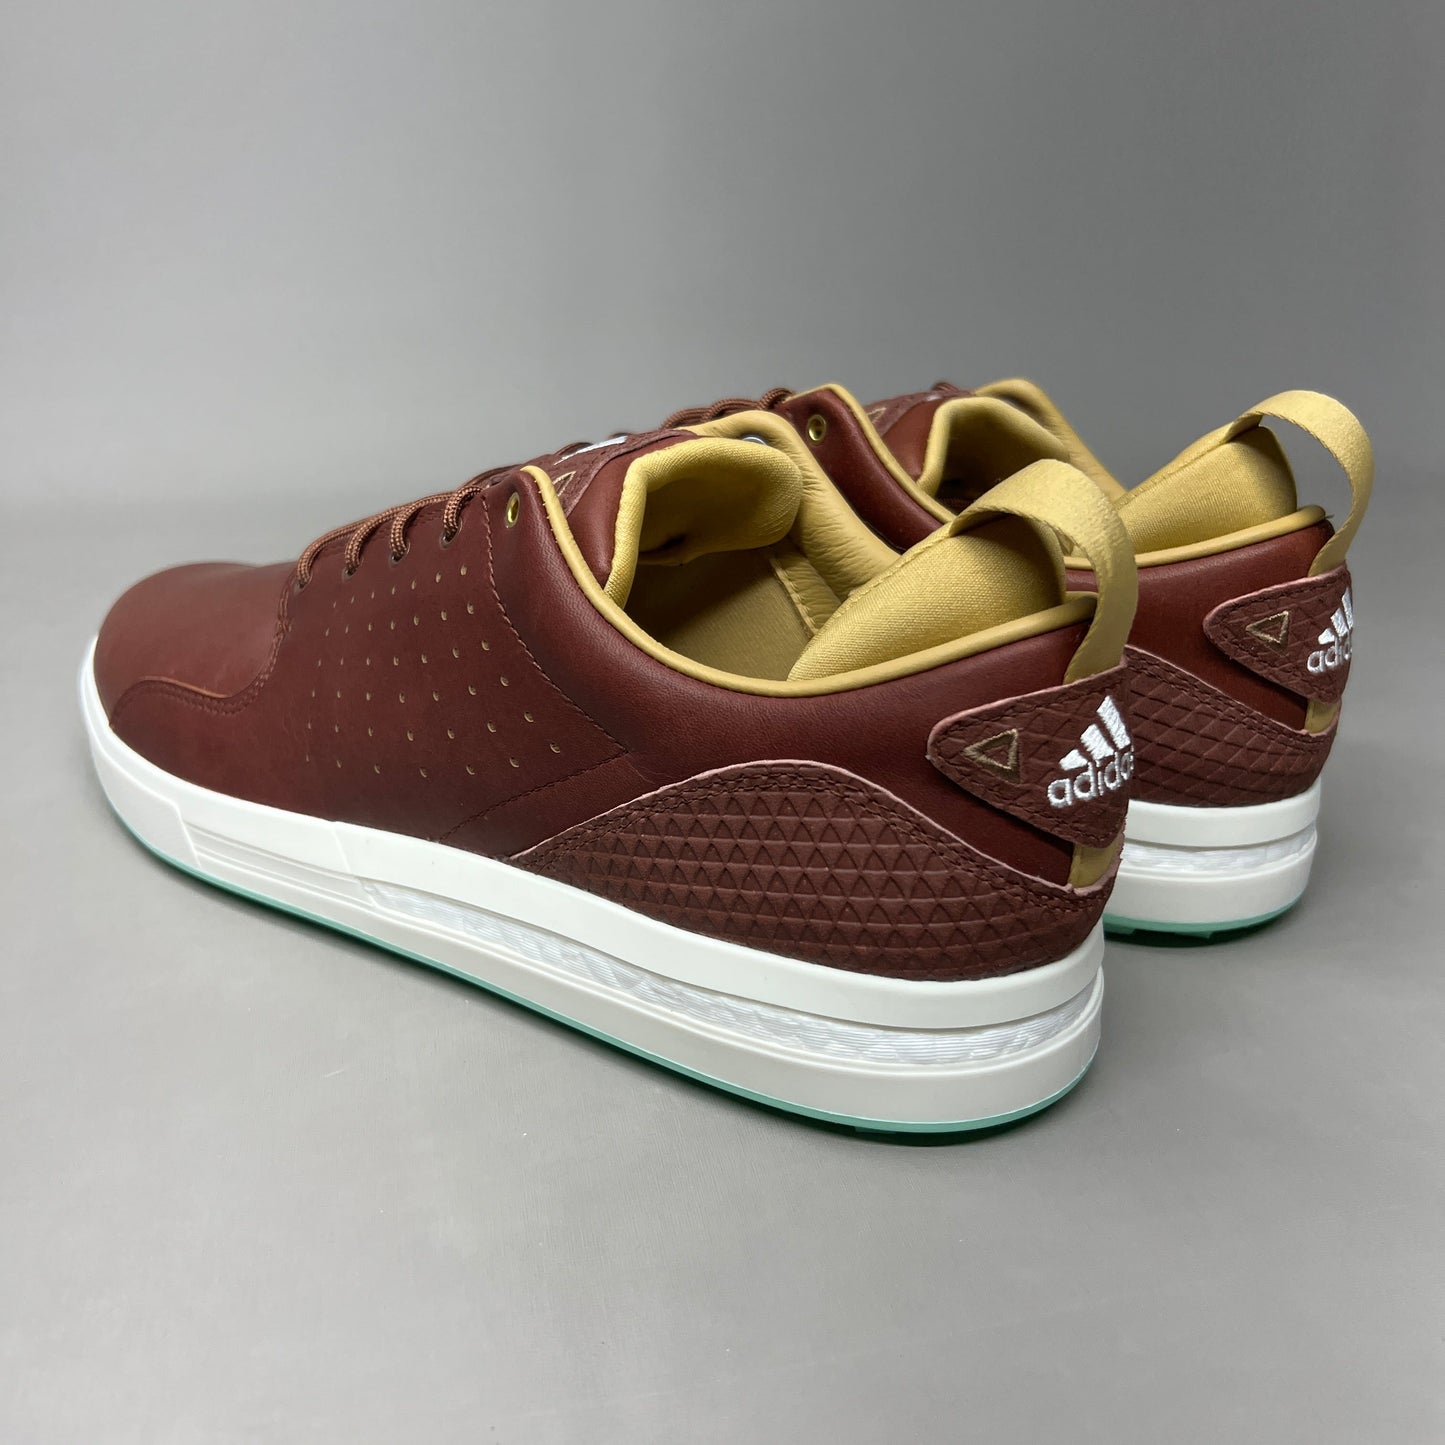 ADIDAS Golf Shoes Waterproof Flopshot Men's Sz 9.5 Tan / Beige / Mint GY8523 (New)